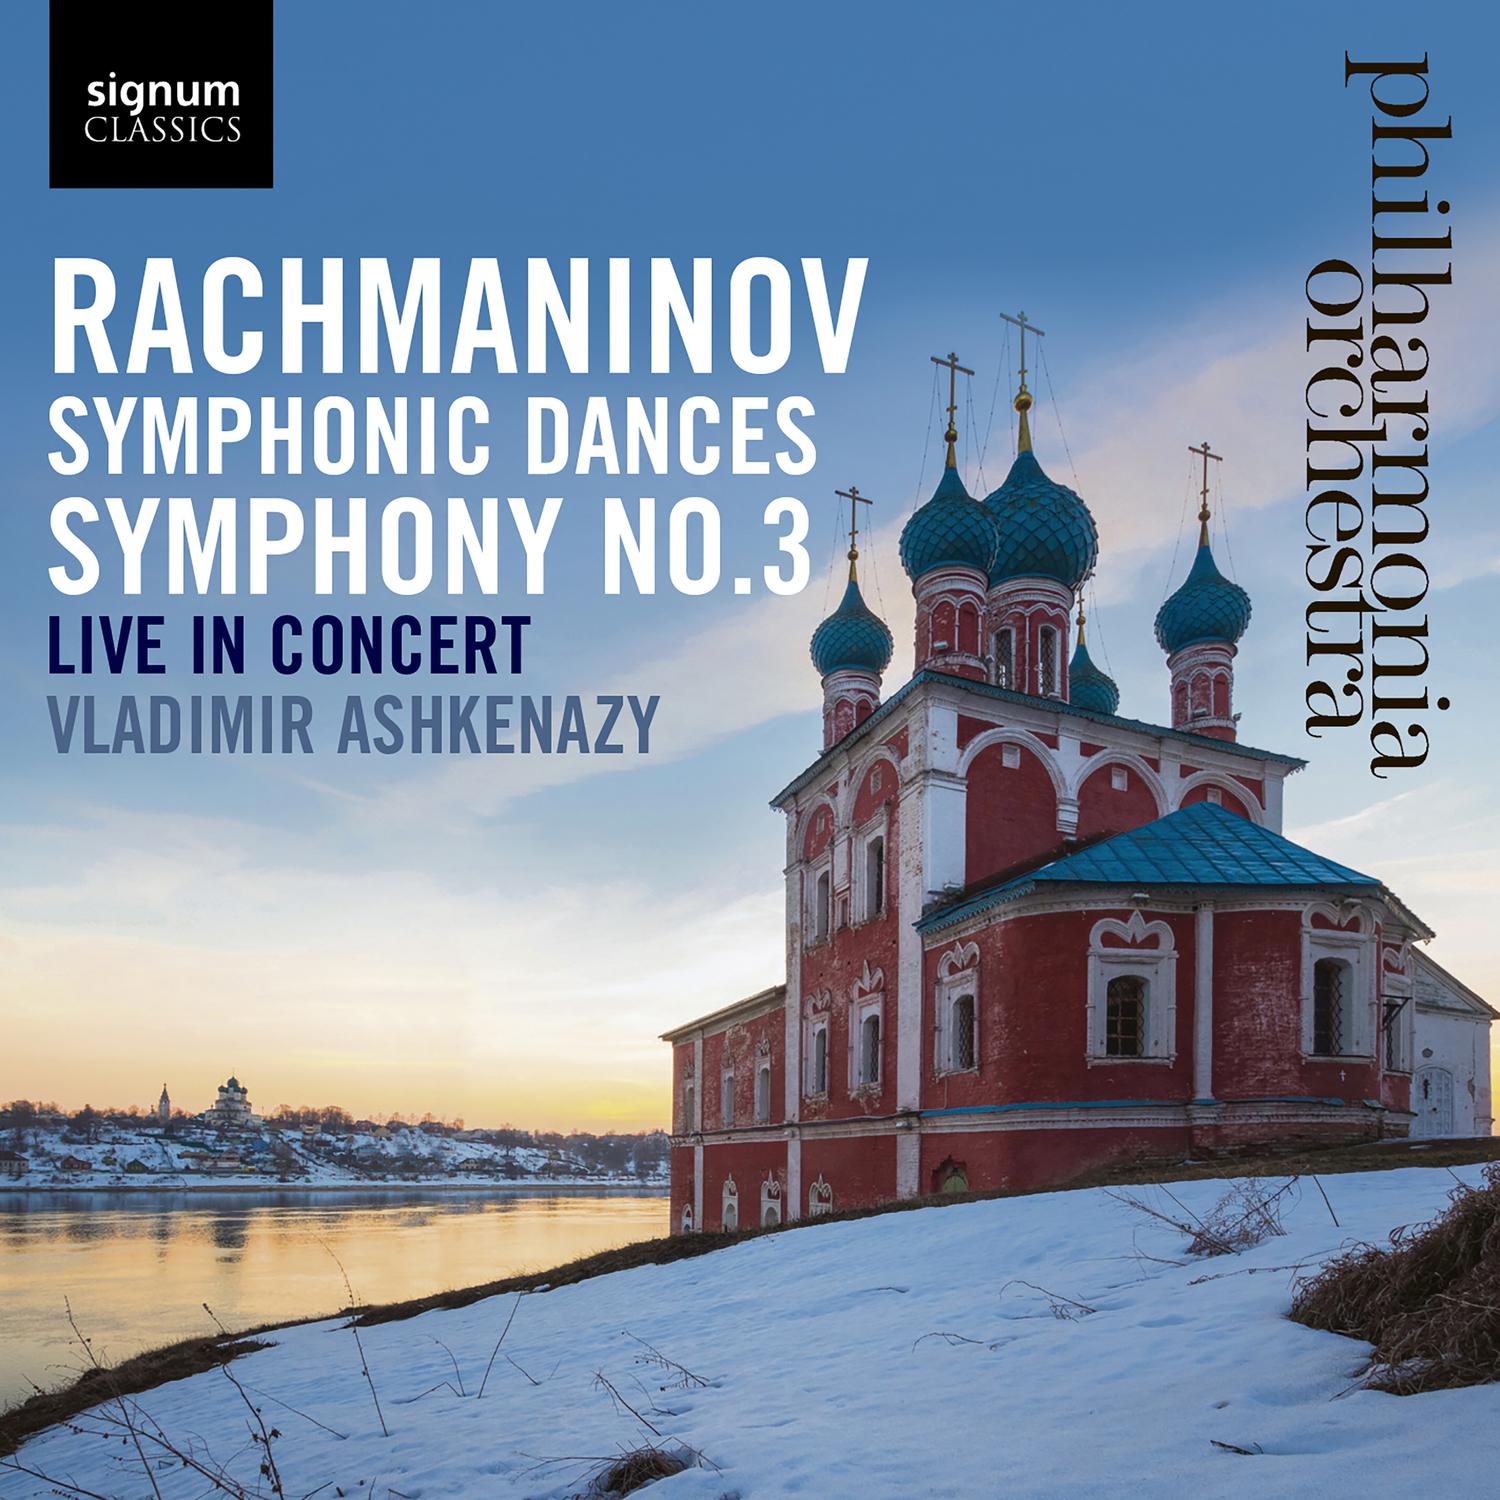 Rachmaninov: Symphonic Dances, Symphony No. 3